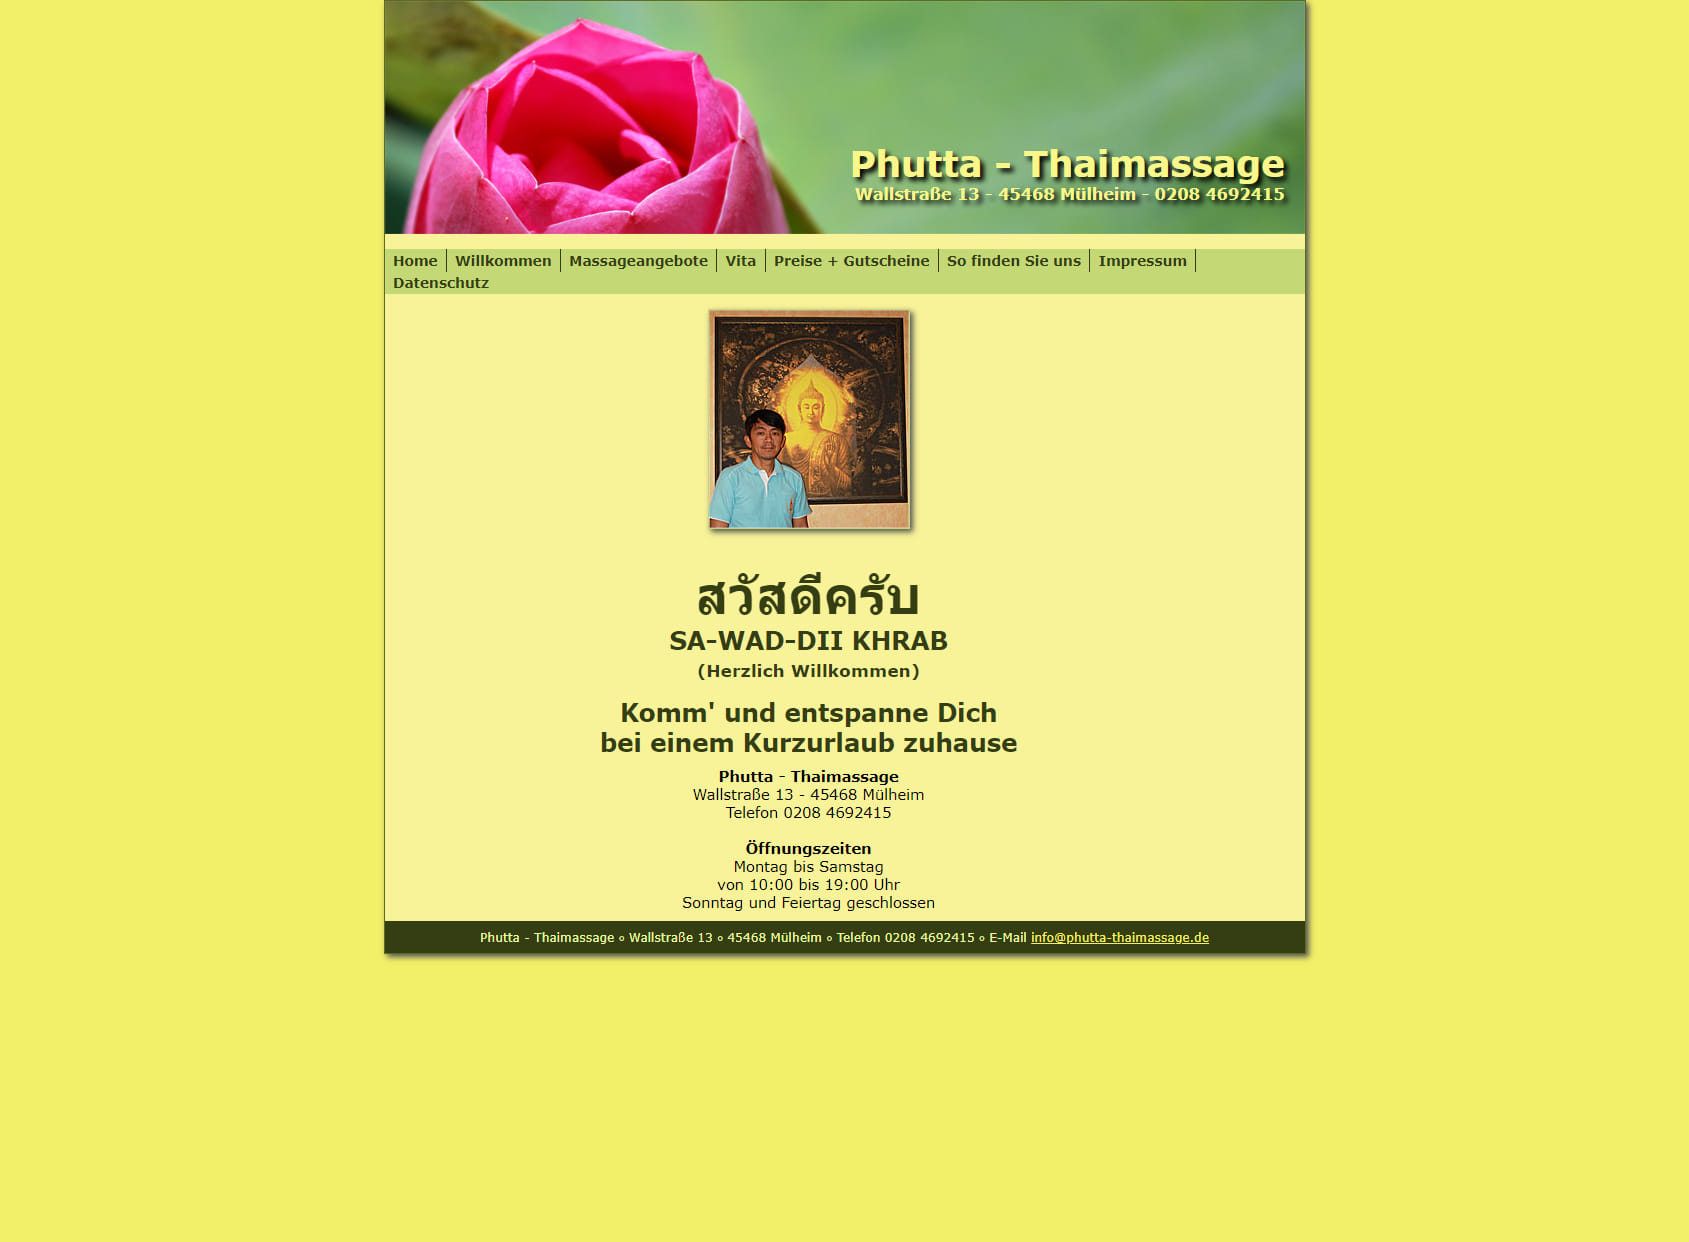 Phuttha - Thaimassage